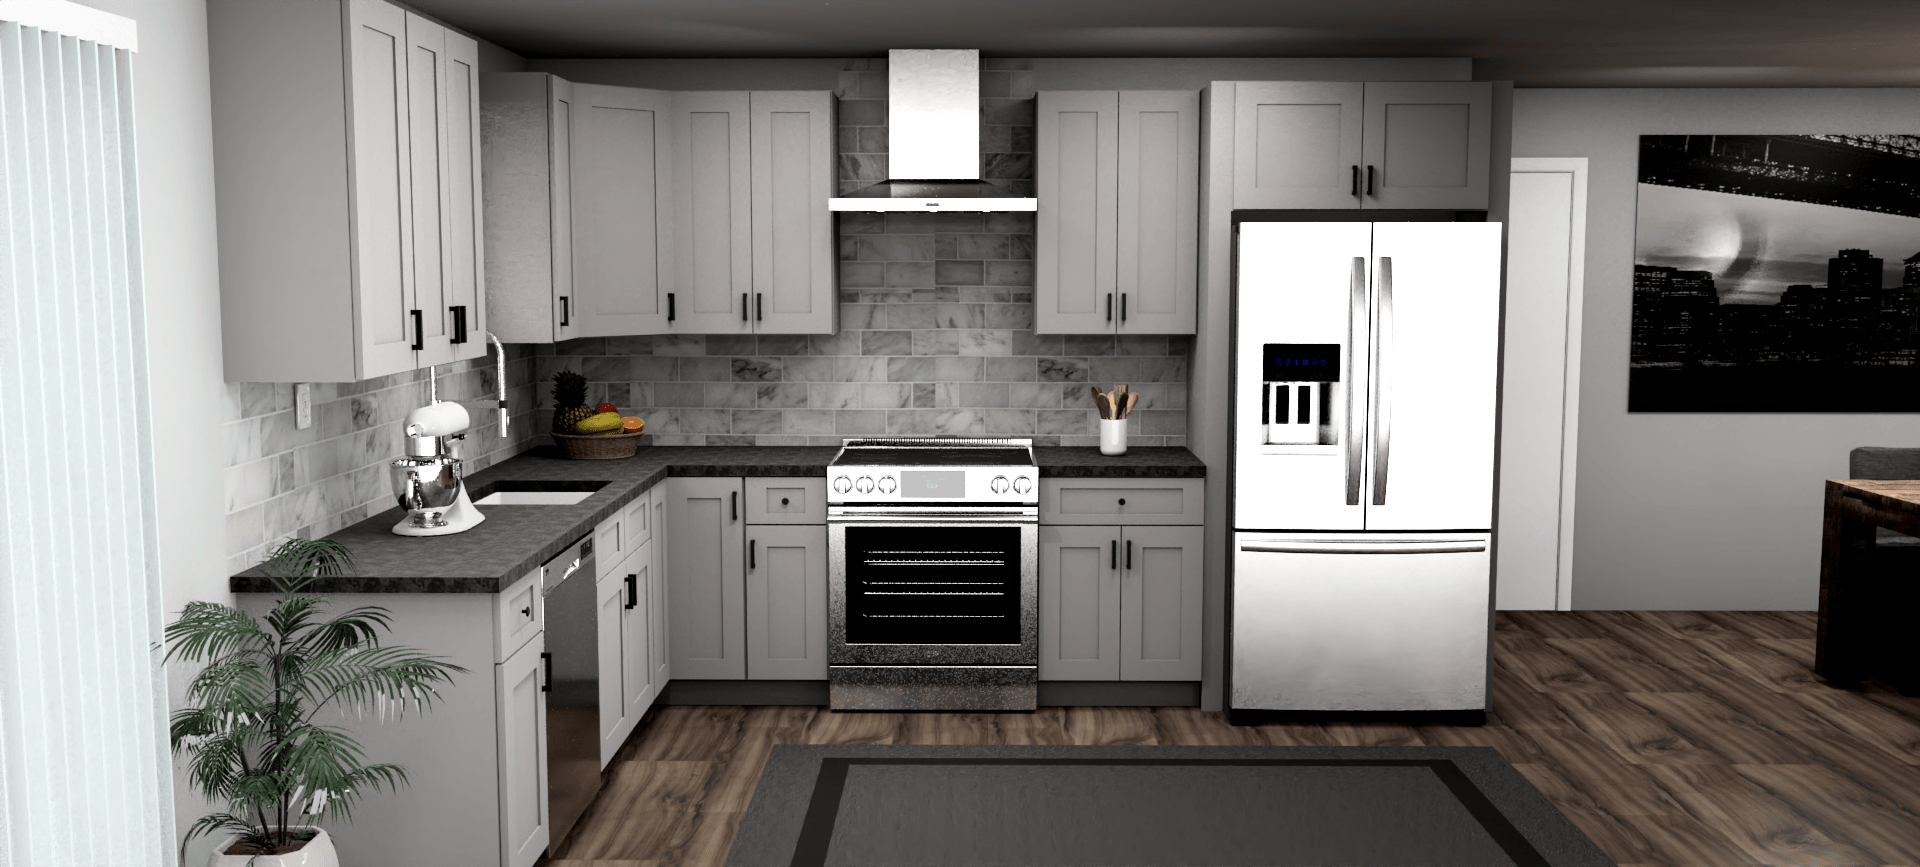 Fabuwood Allure Galaxy Nickel 9 x 12 L Shaped Kitchen Front Layout Photo